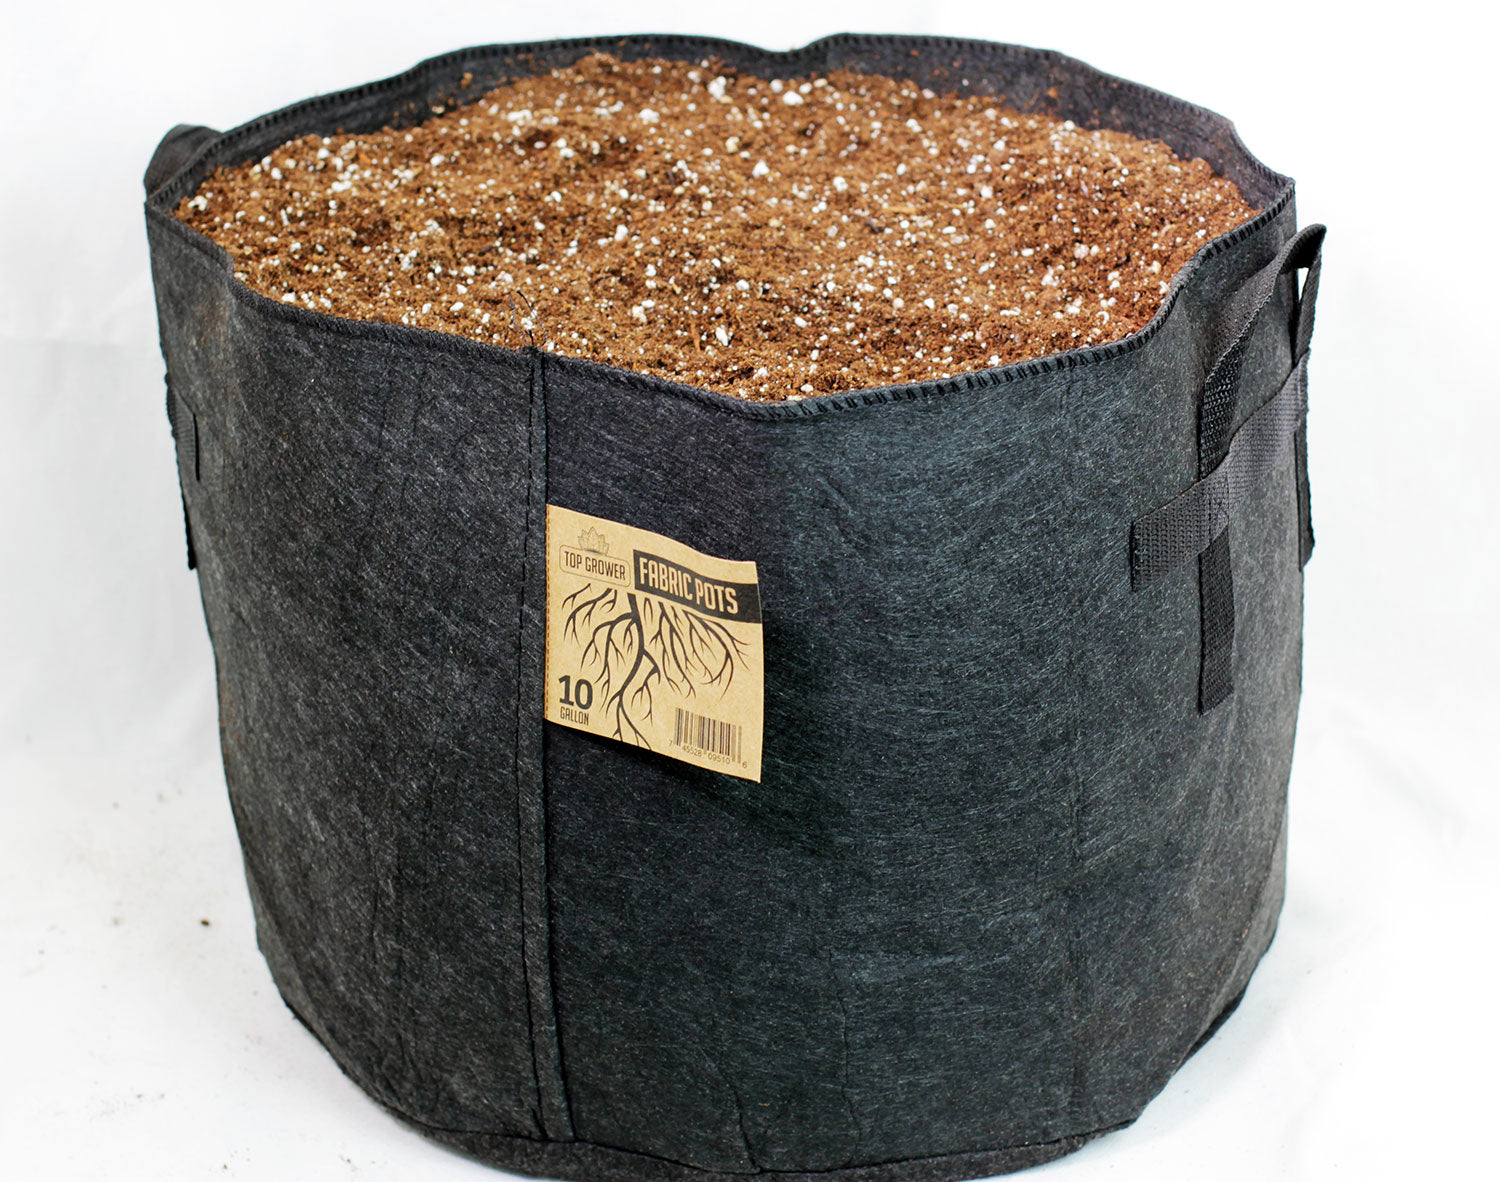 TopoGrow 5 7 10 15 20 30 45 65 100 200 Gallon Grow Bags Fabric Pots Plant  Grow